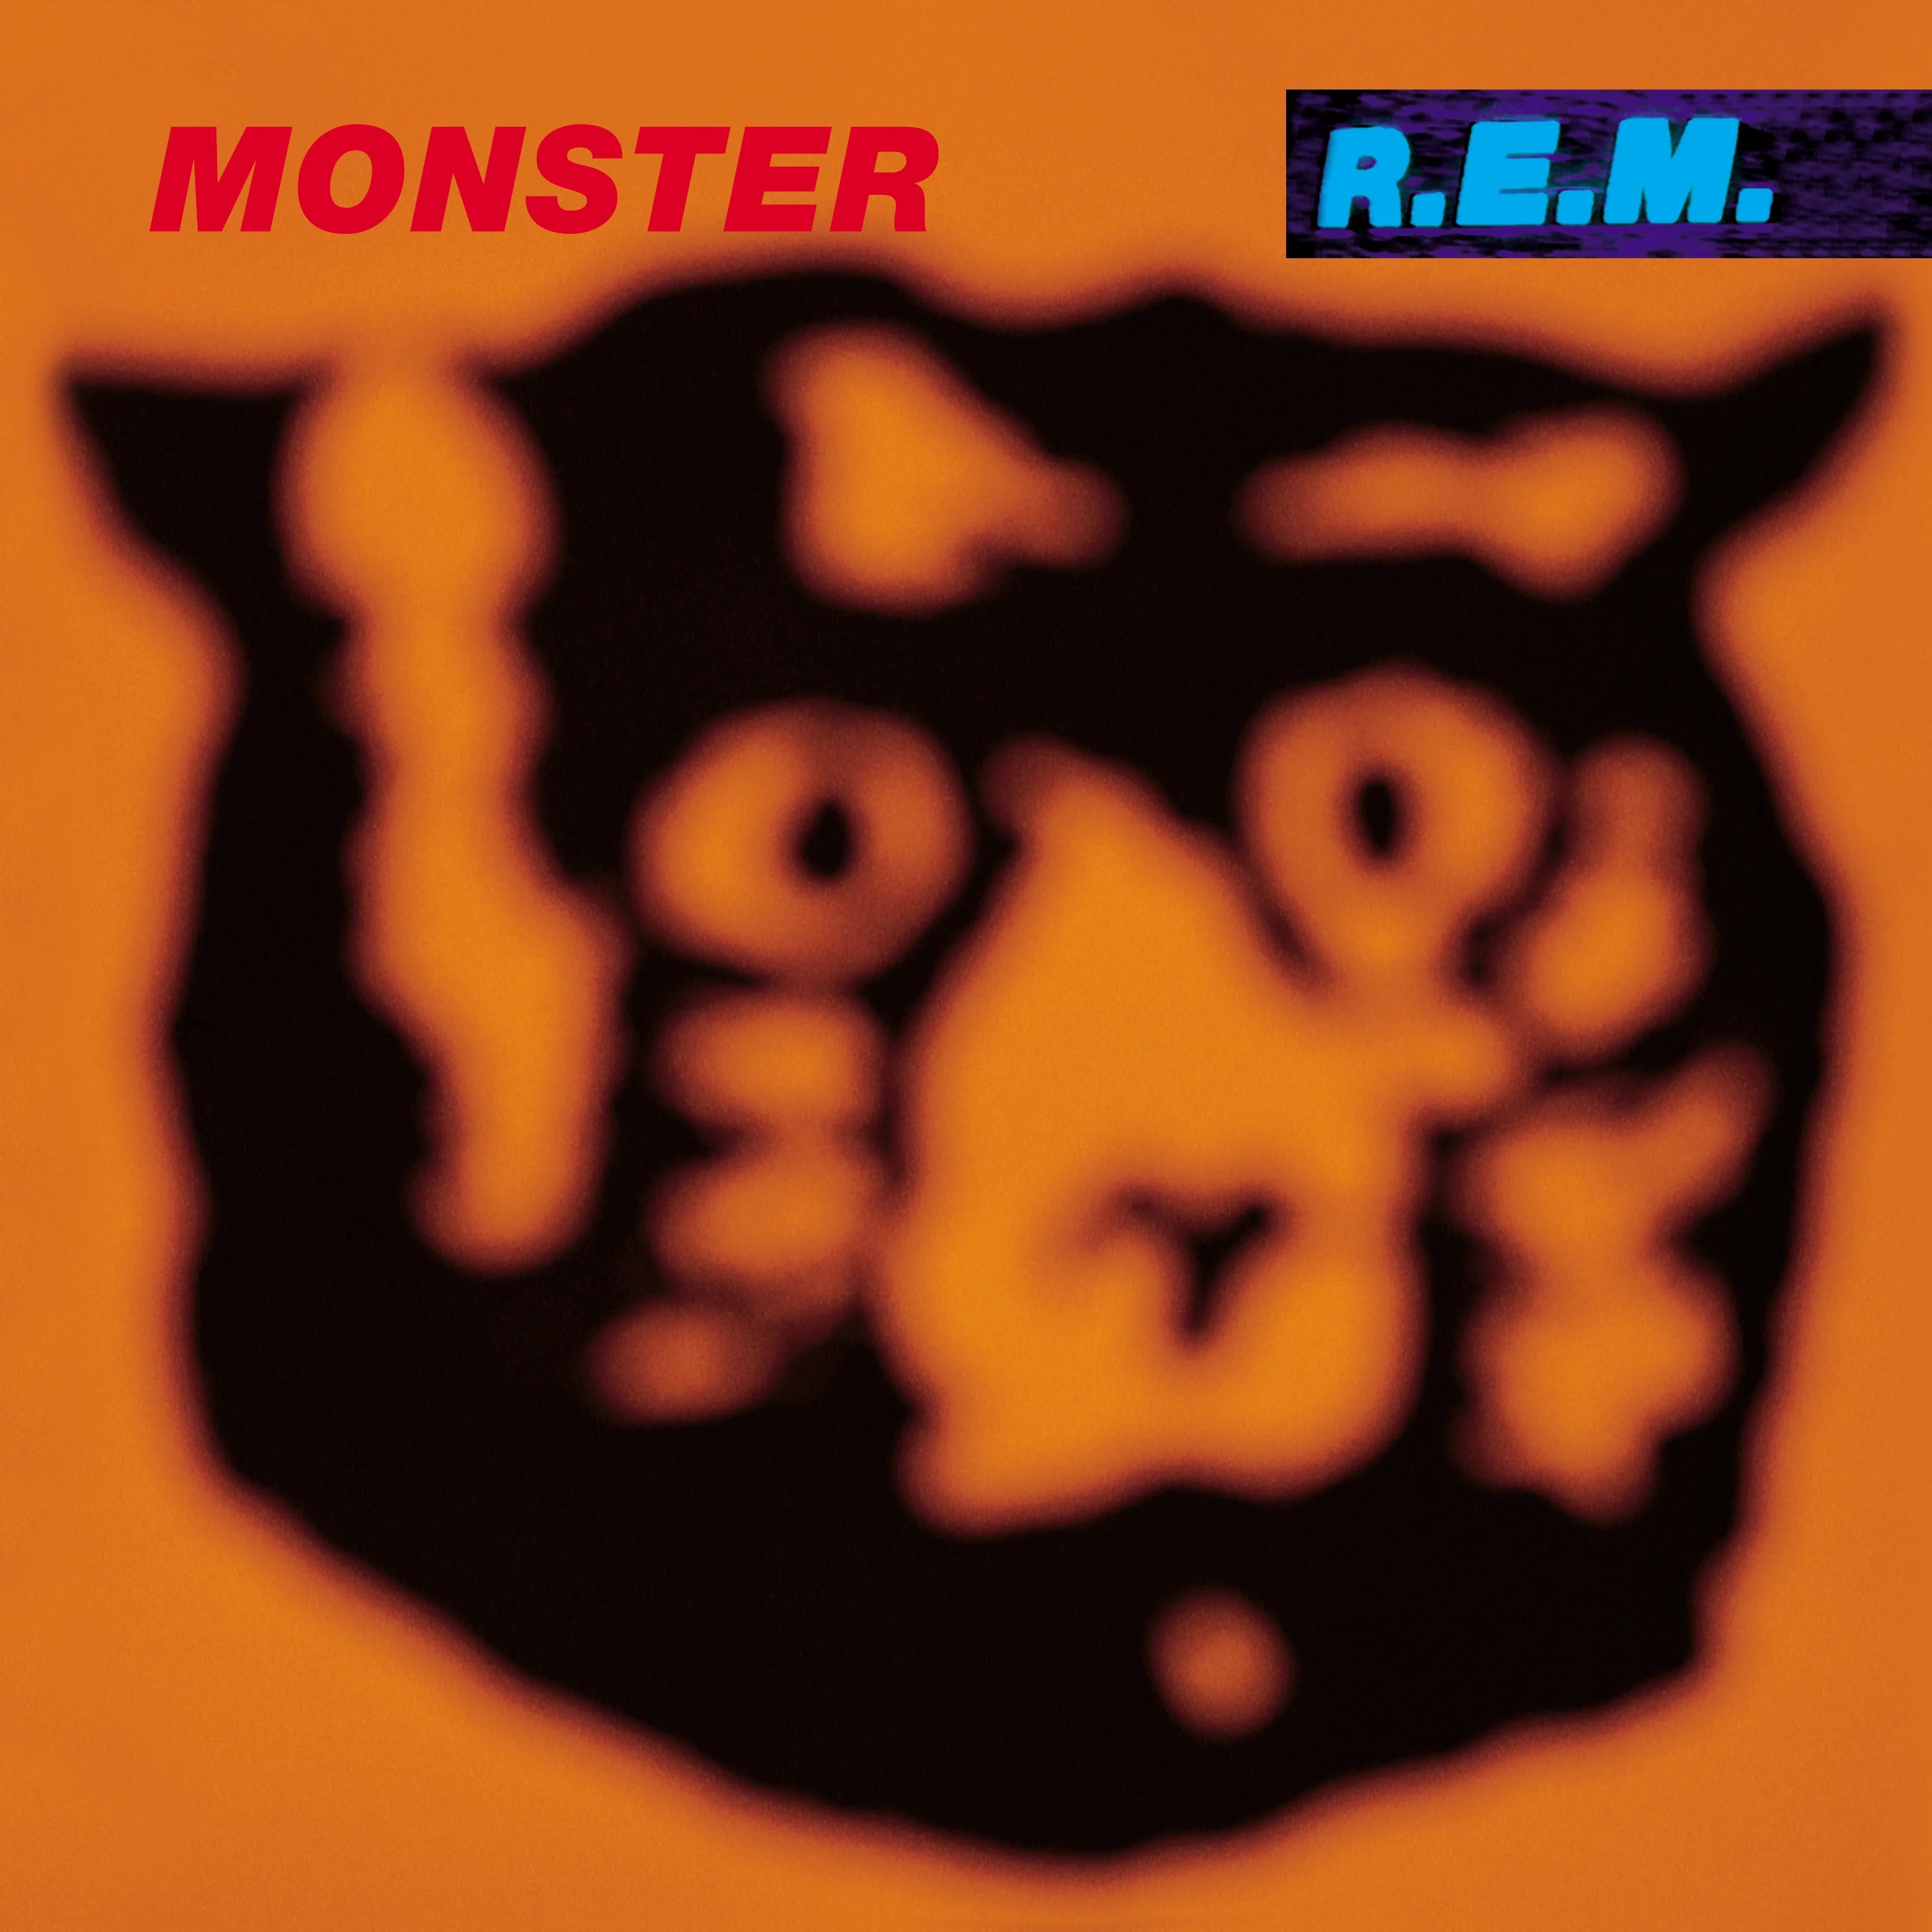 R.E.M. — Strange Currencies cover artwork